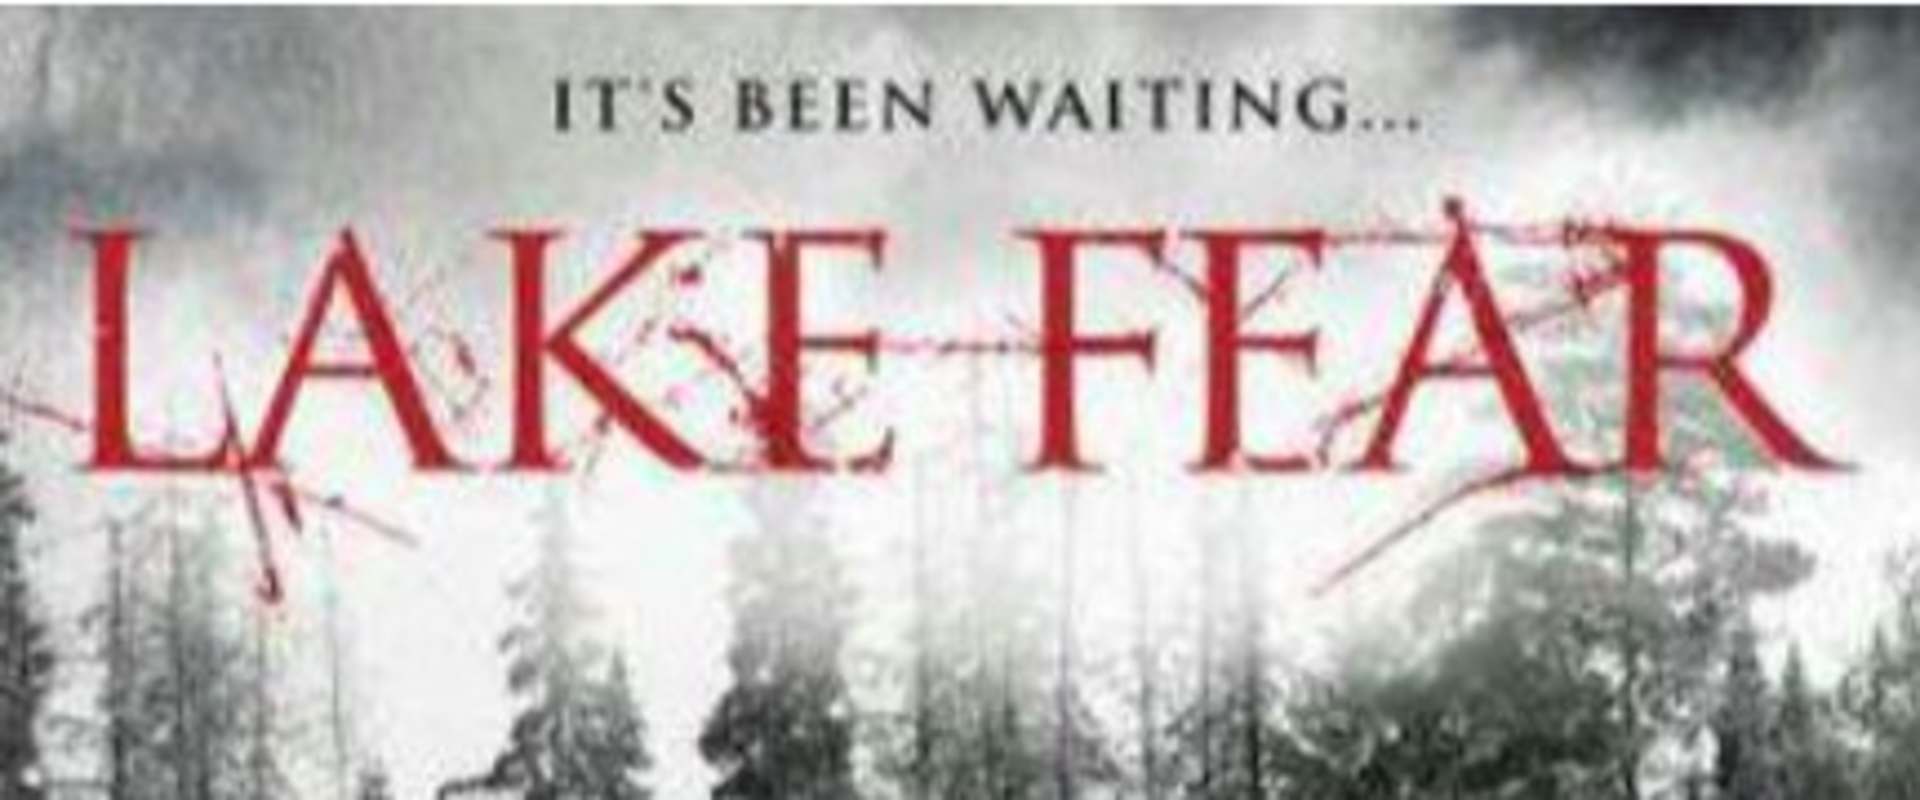 lake fear 3 trailer